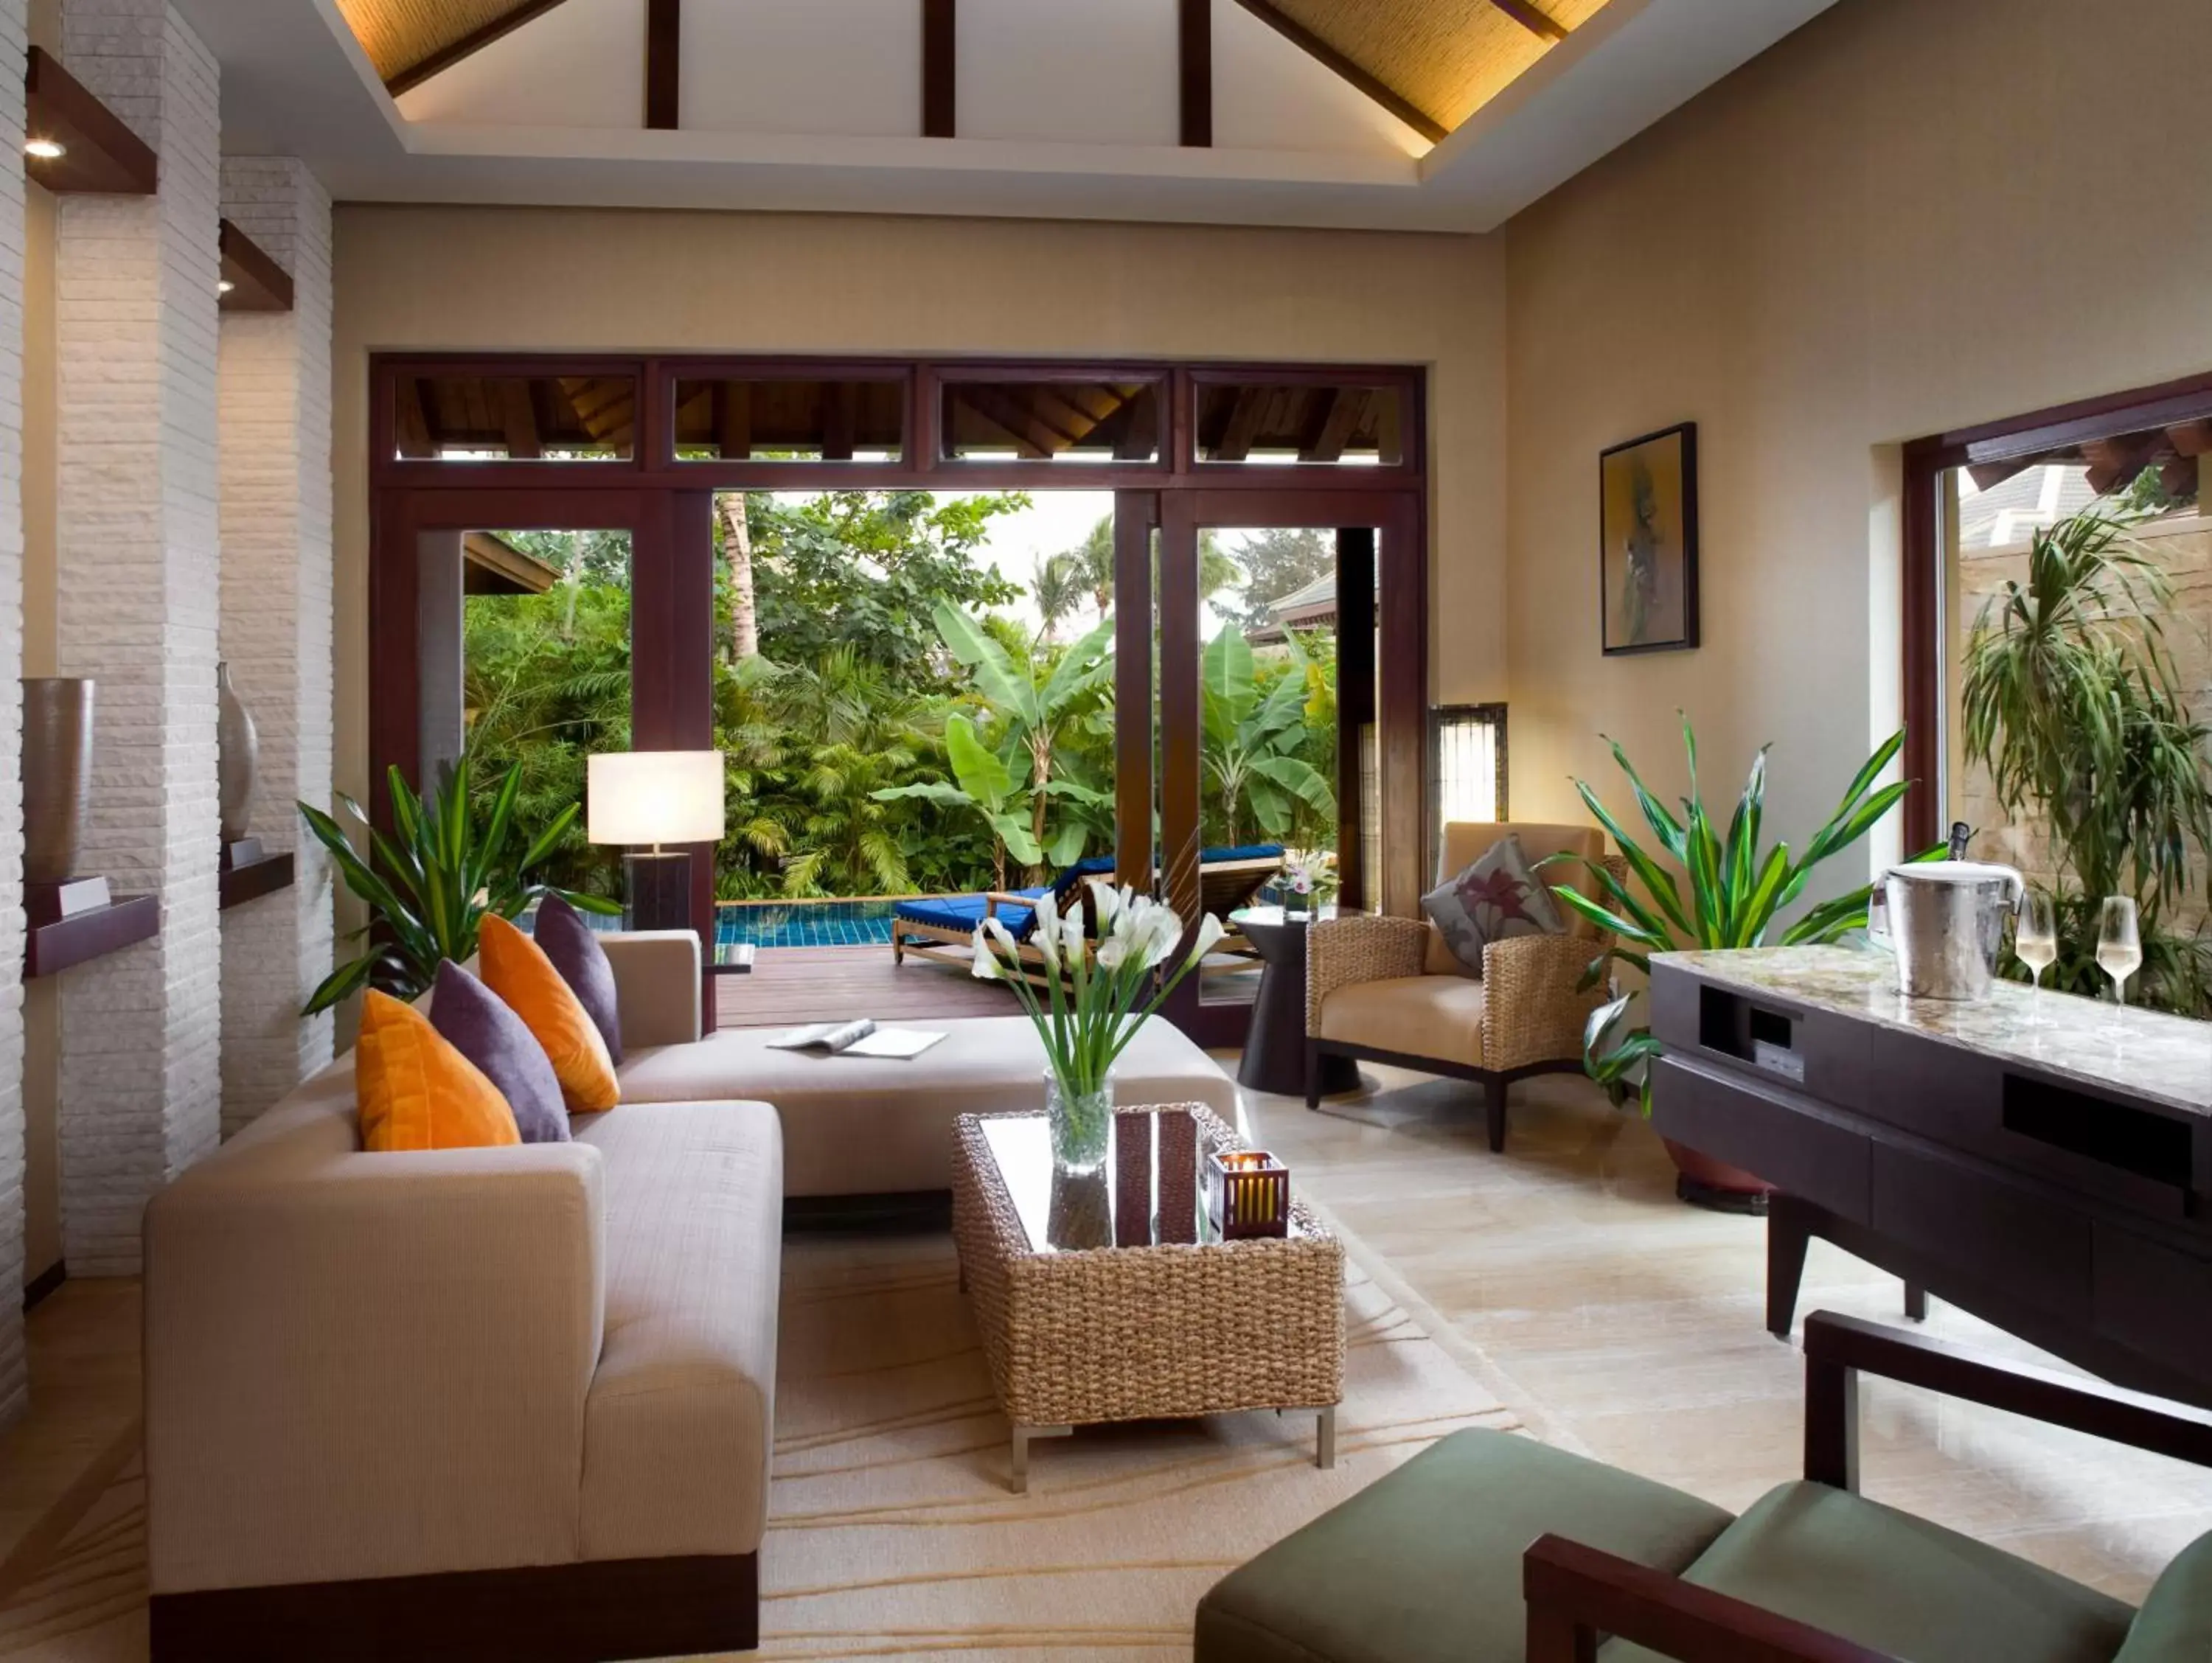 Photo of the whole room in The Ritz-Carlton Sanya, Yalong Bay